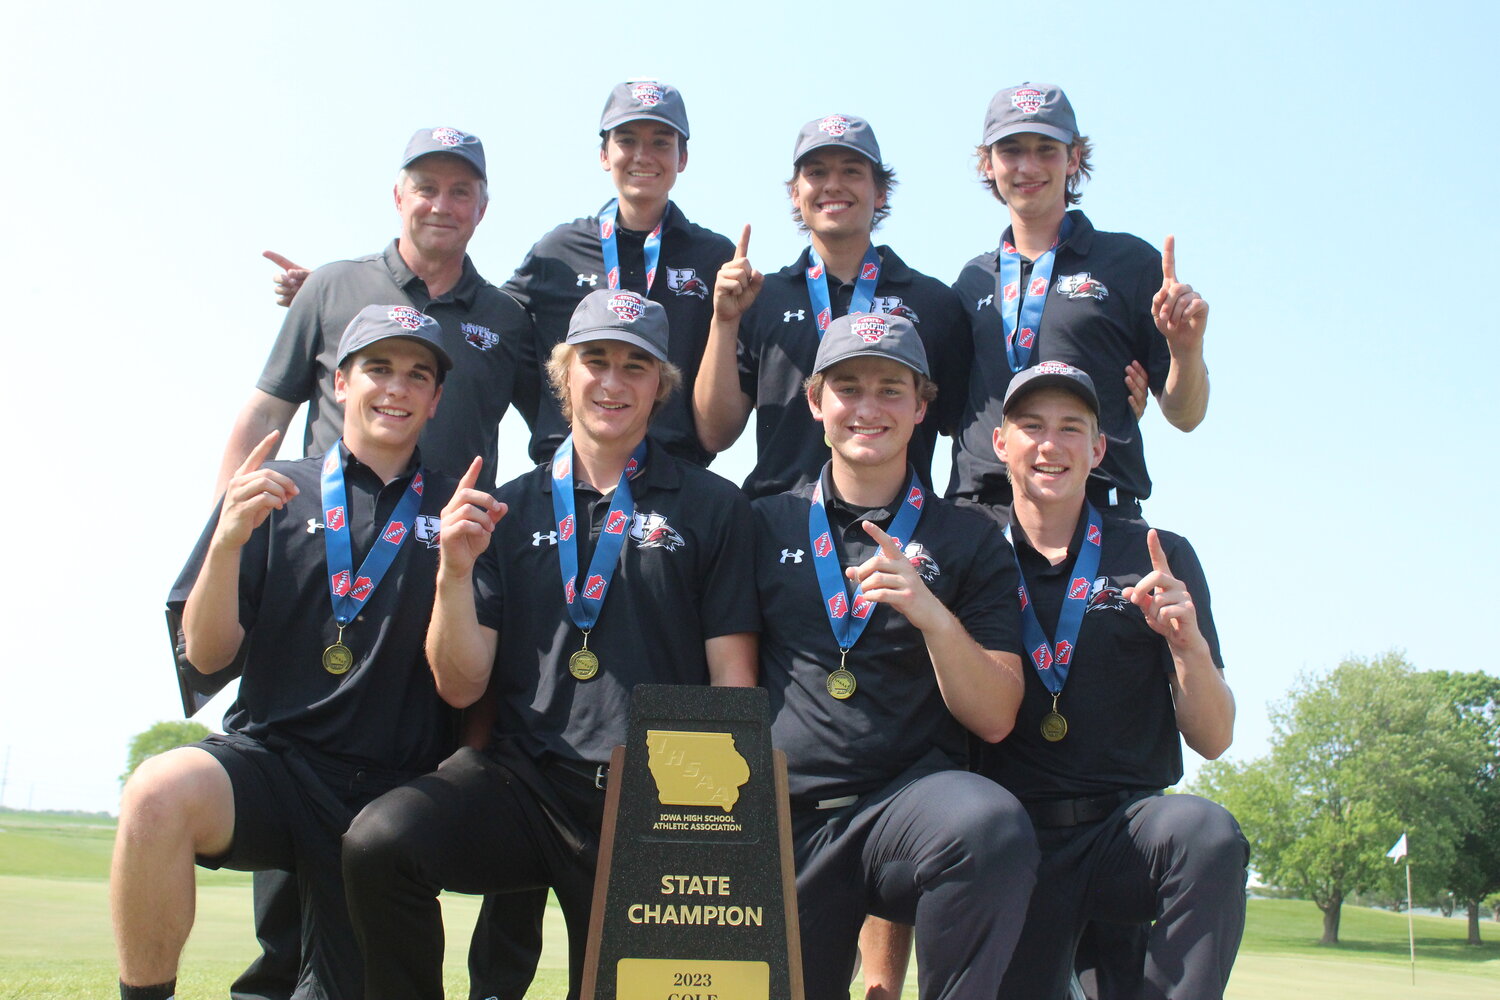 Hillcrest golfers celebrate winning the school's first state championship in golf, finishing off an unbeaten season.